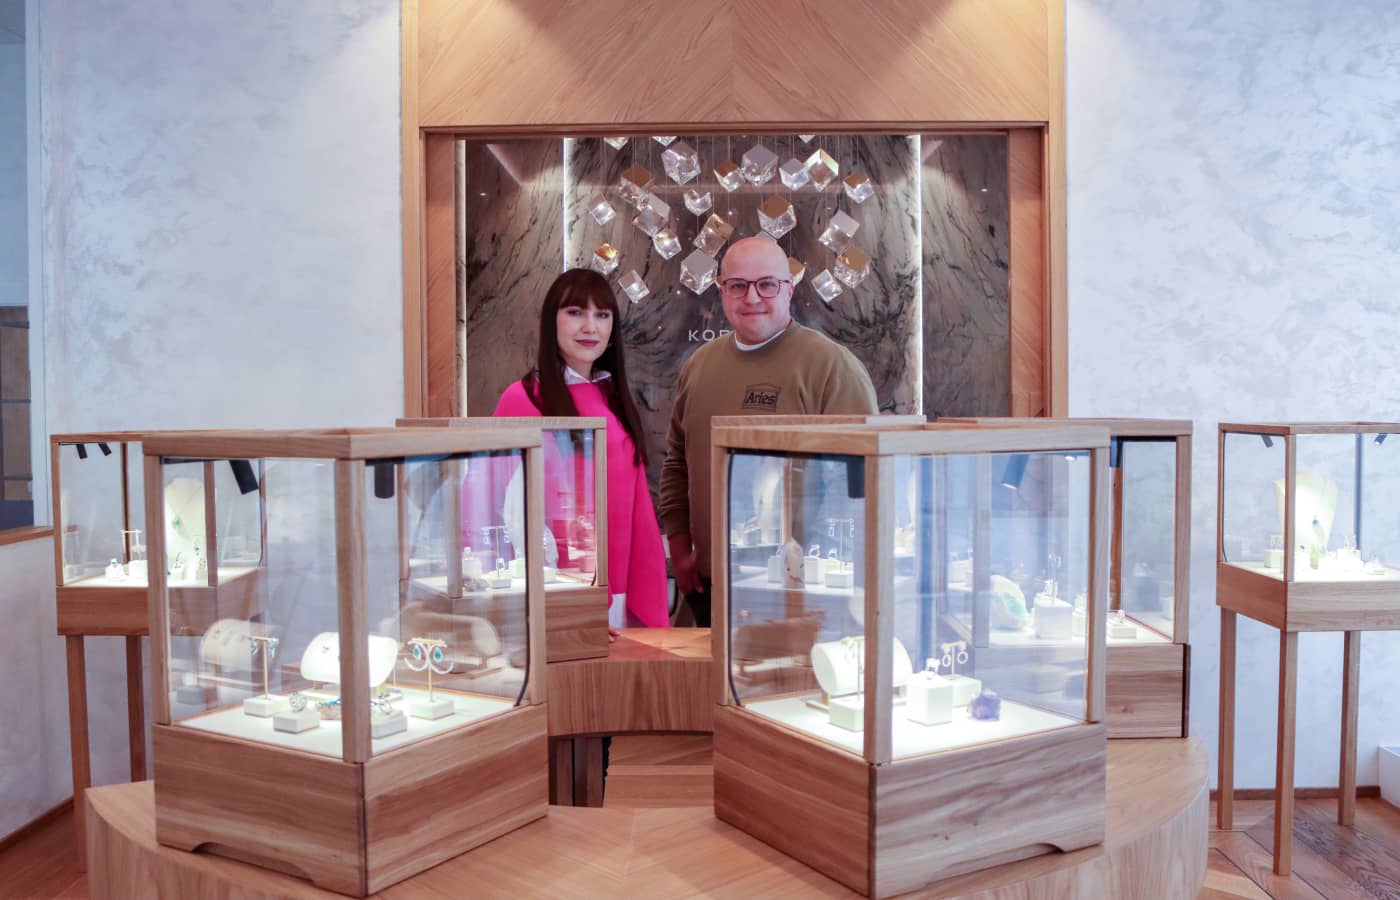 Katerina Perez with Luboš Korbička, the founder and designer behind Korbička Šperky, at his boutique in Brno, Czech Republic